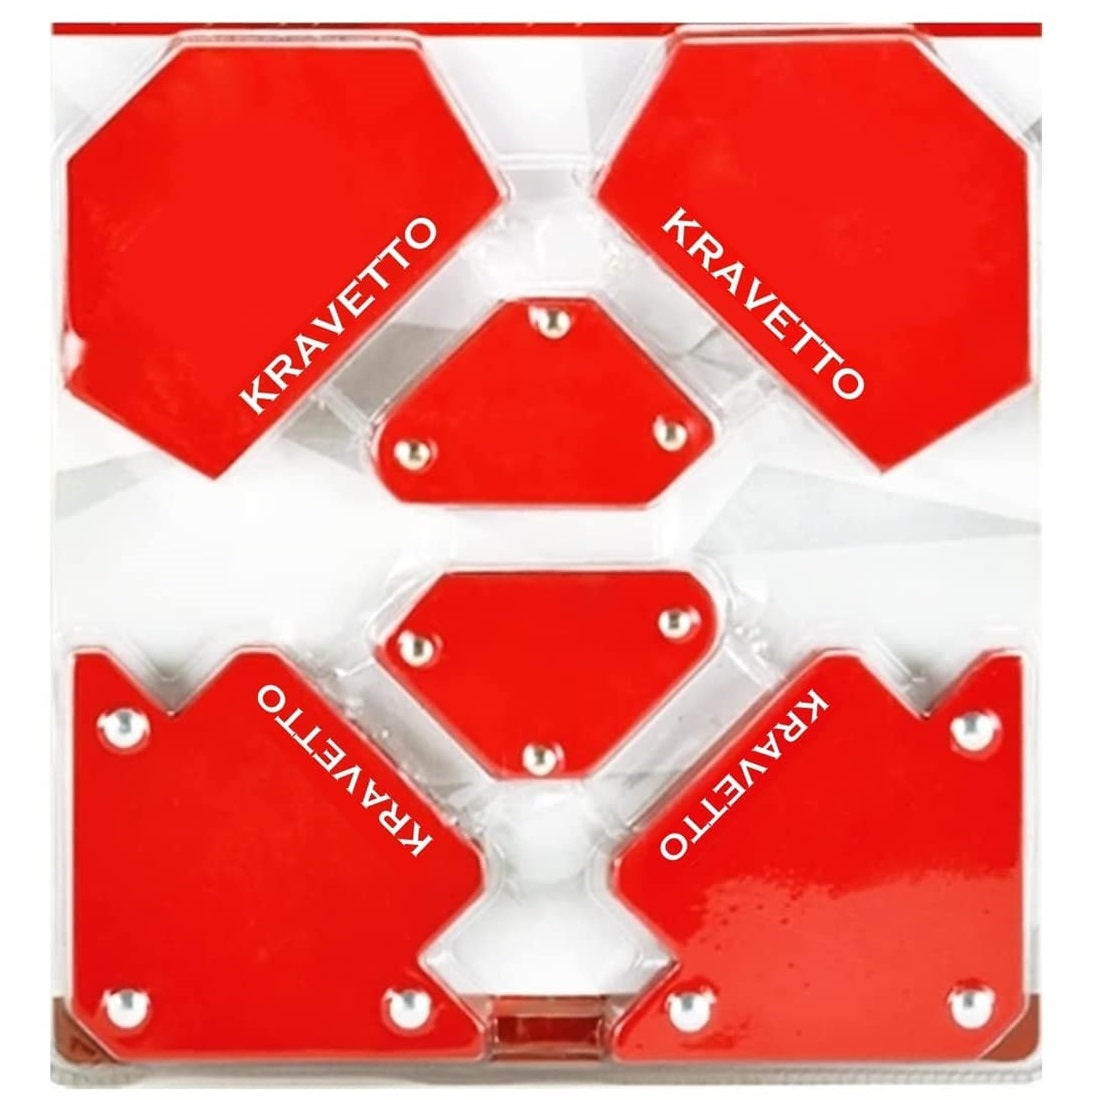 Kravetto 6 Pcs Arrow Multiangle & Mini Square Magnetic Welder Clamp DHT-3